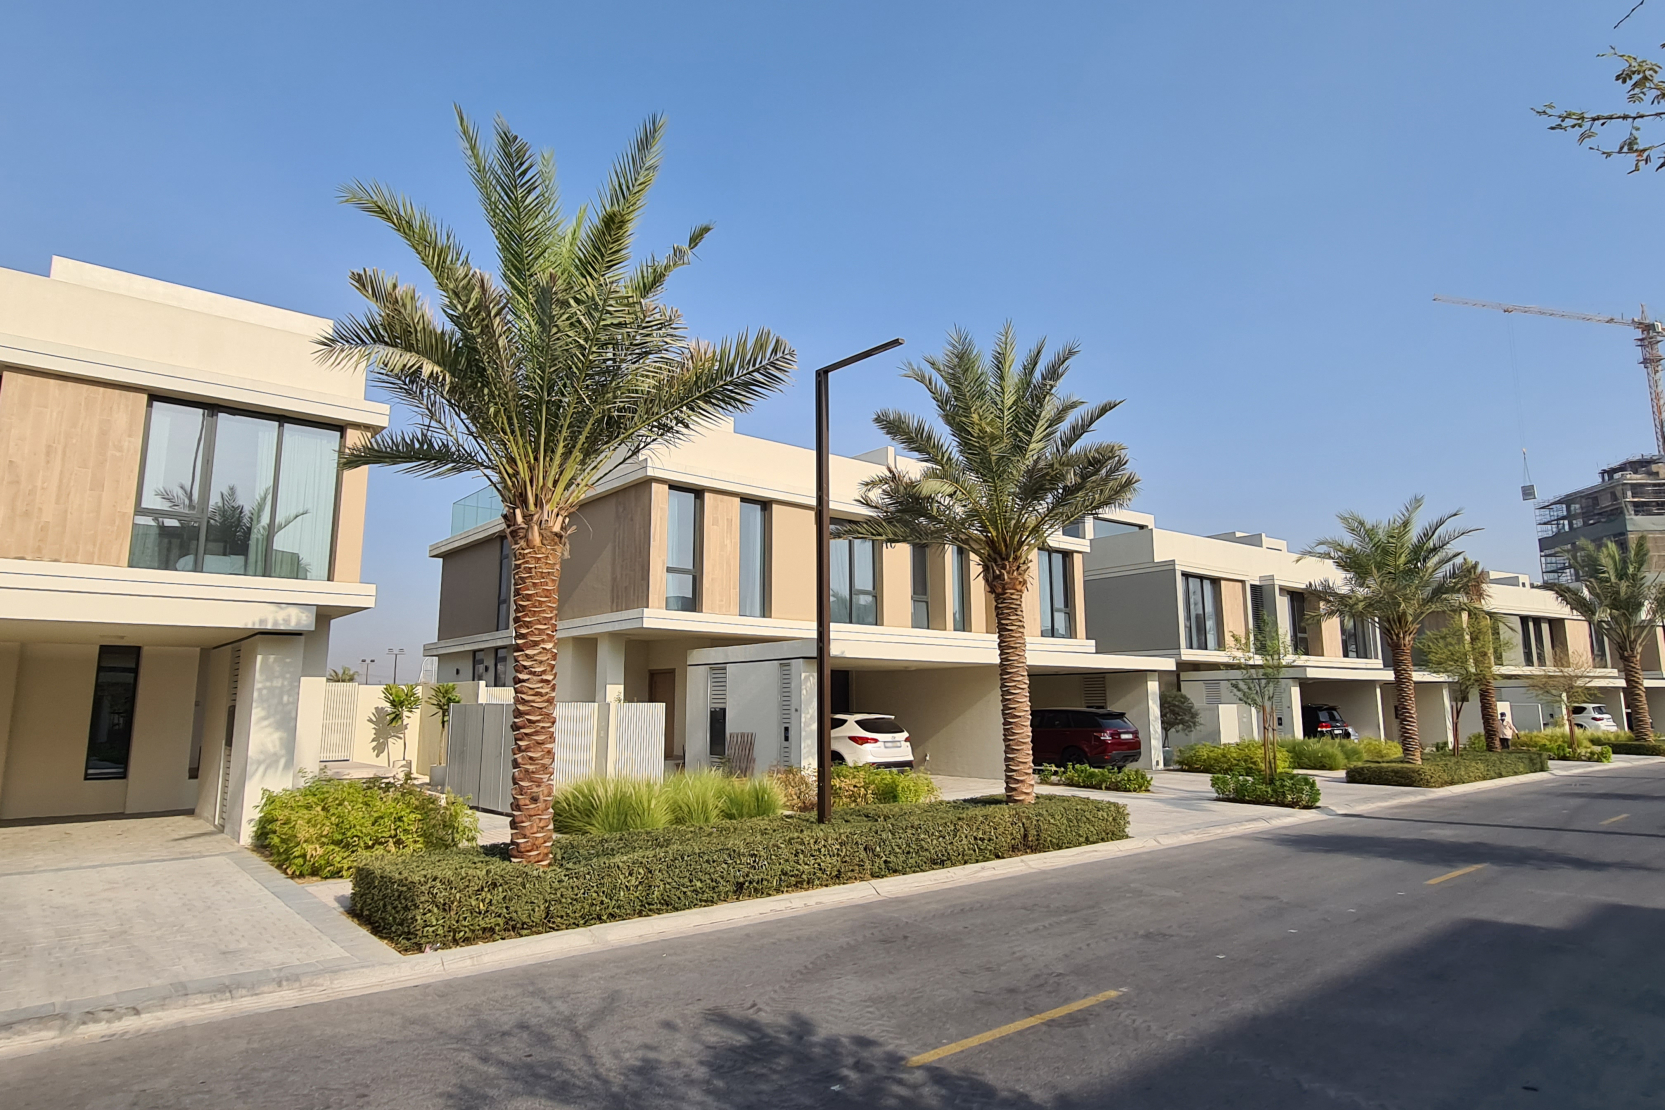 Dubai Hills Estate